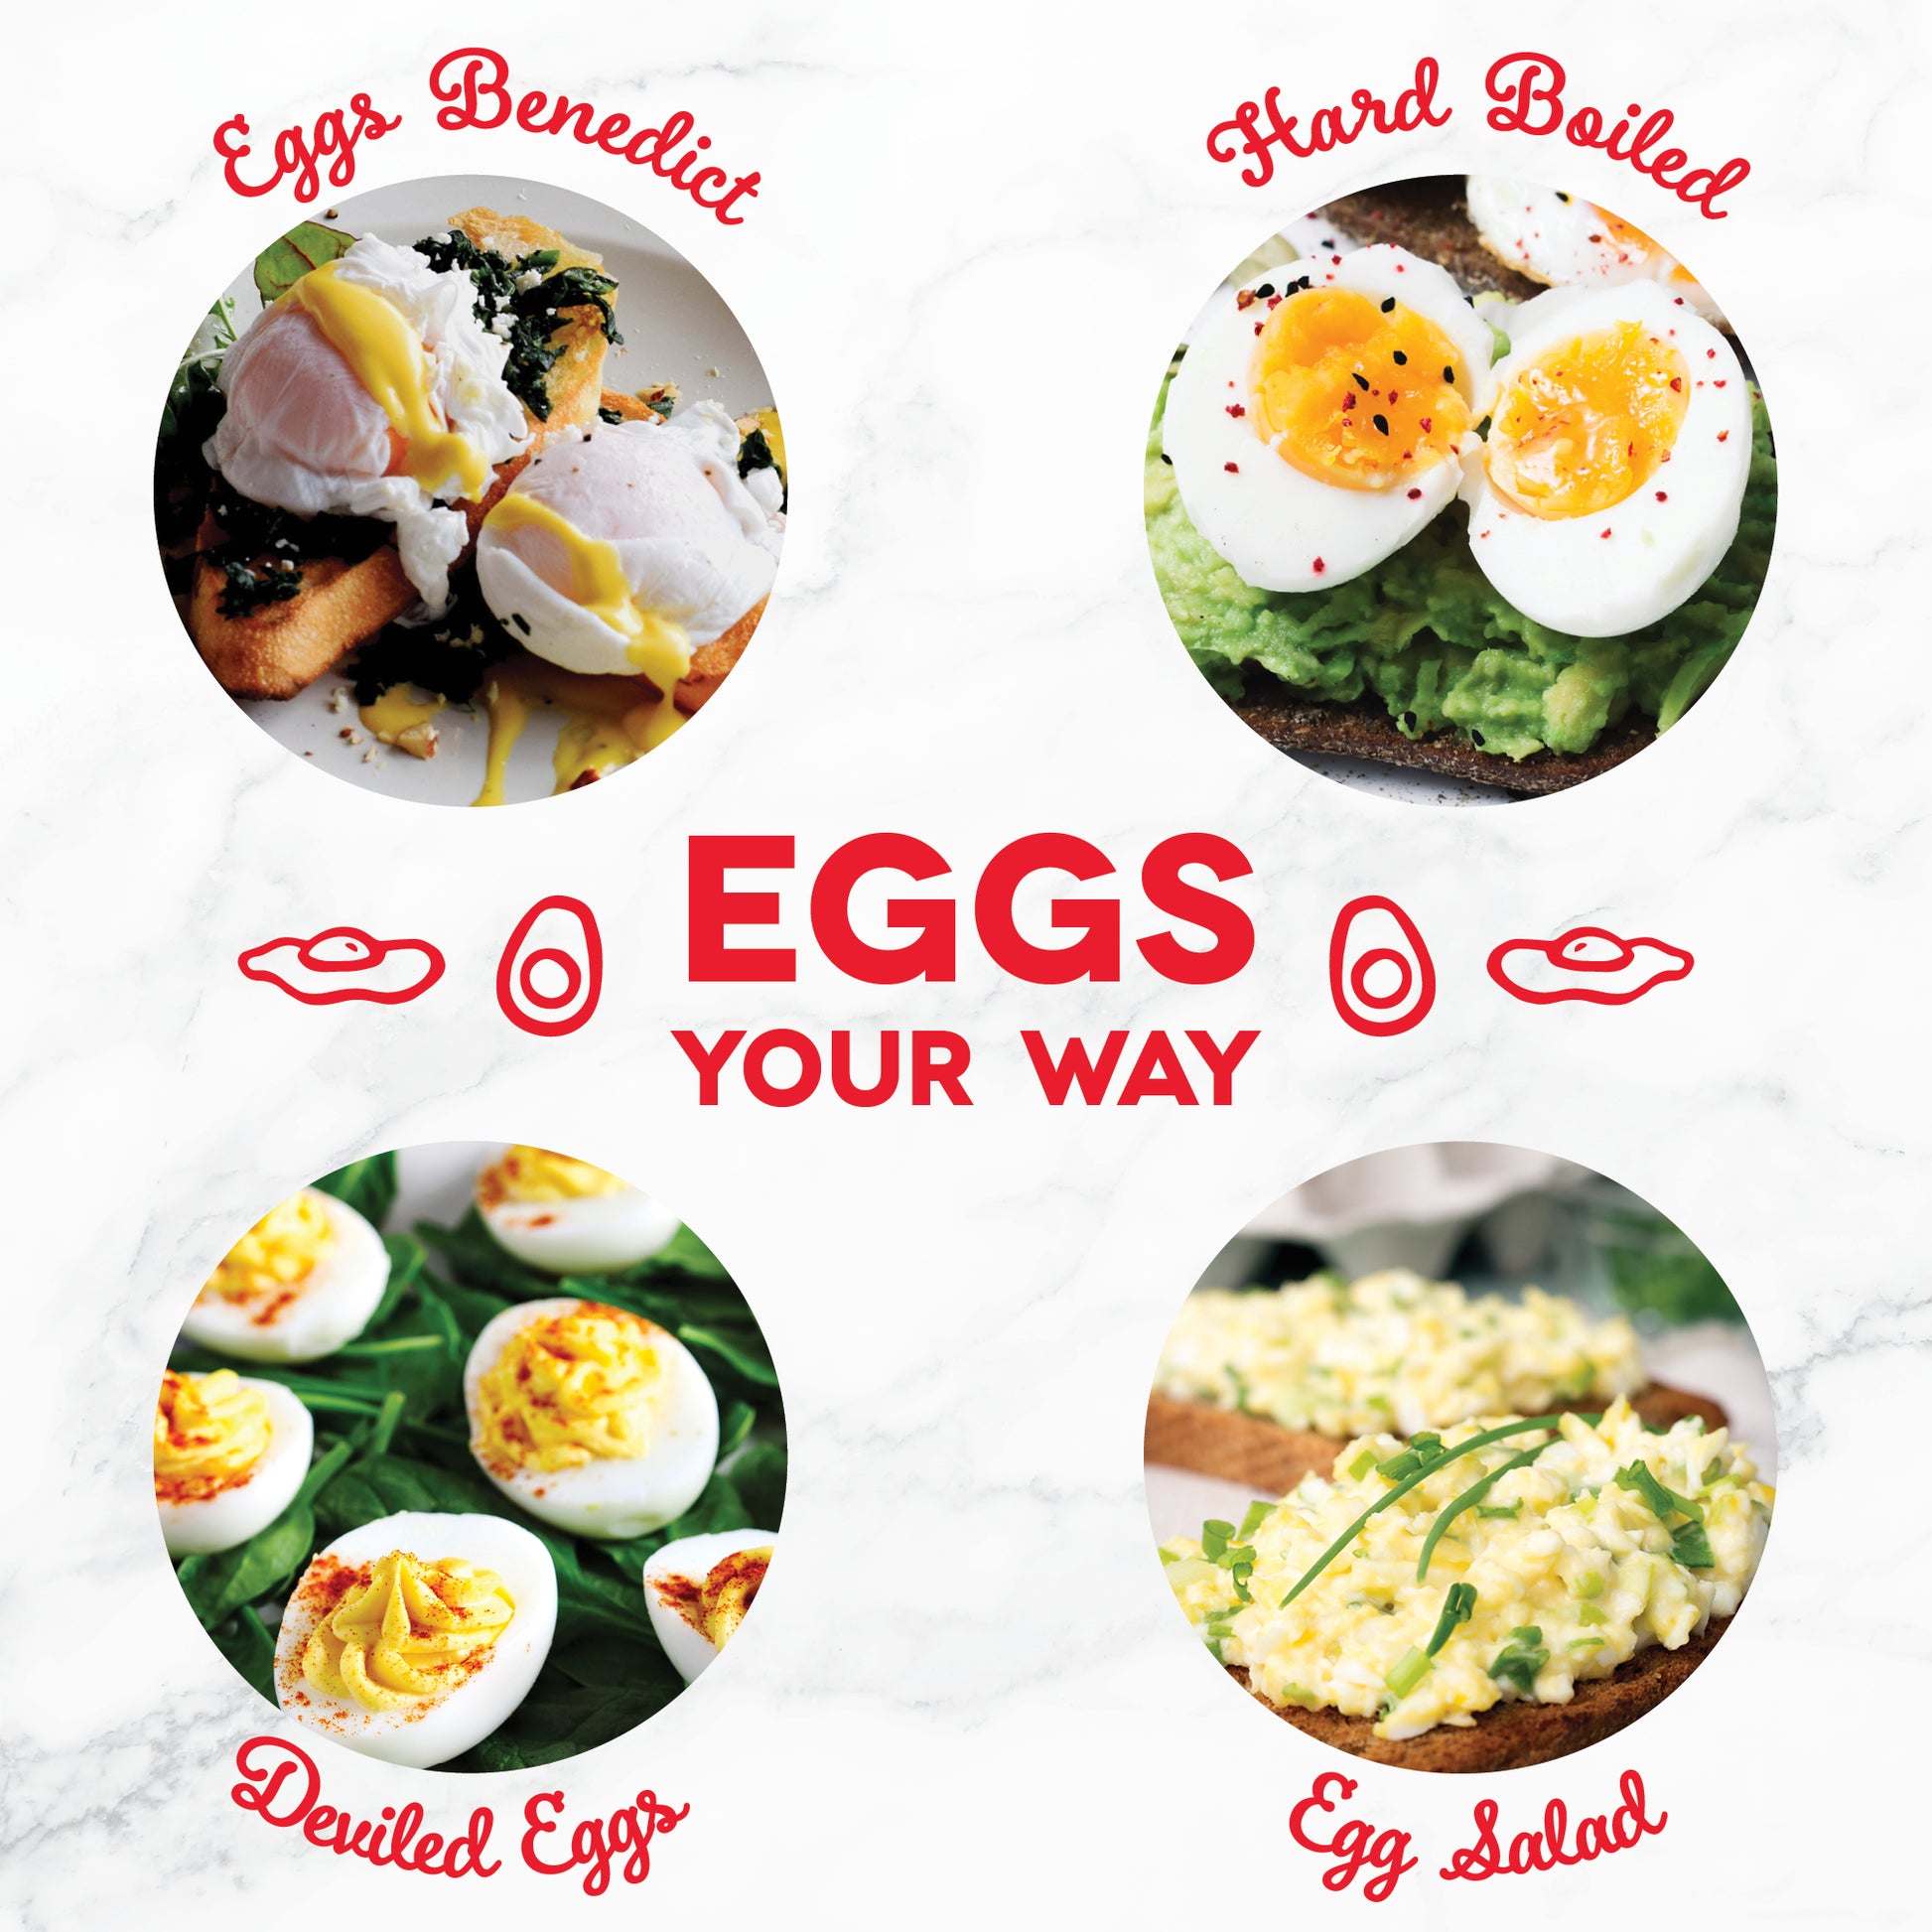 7-Egg Everyday Egg Cooker-Dash – Second Chance Thrift Store - Bridge